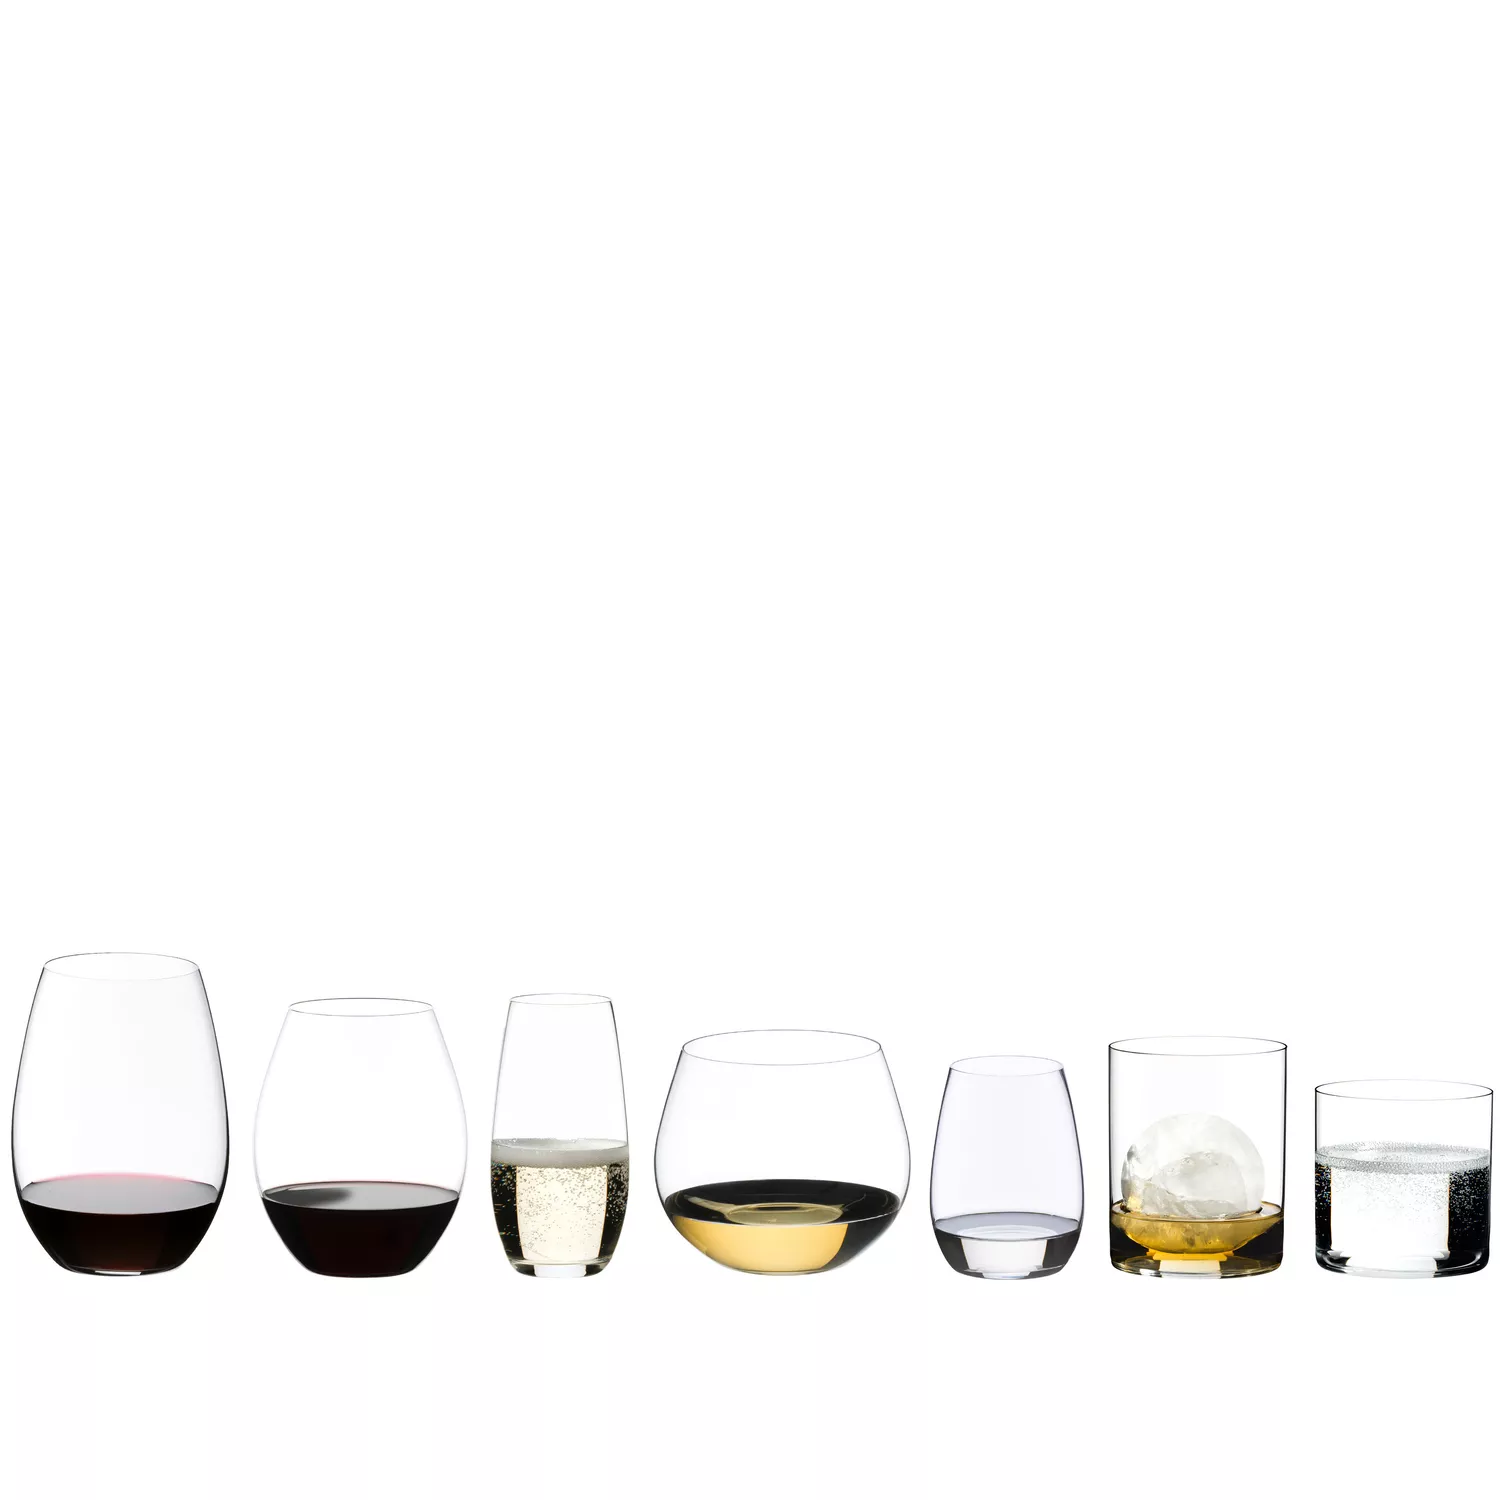 RIEDEL O Wine Tumbler Oaked Chardonnay Wine Glass, Set of 2